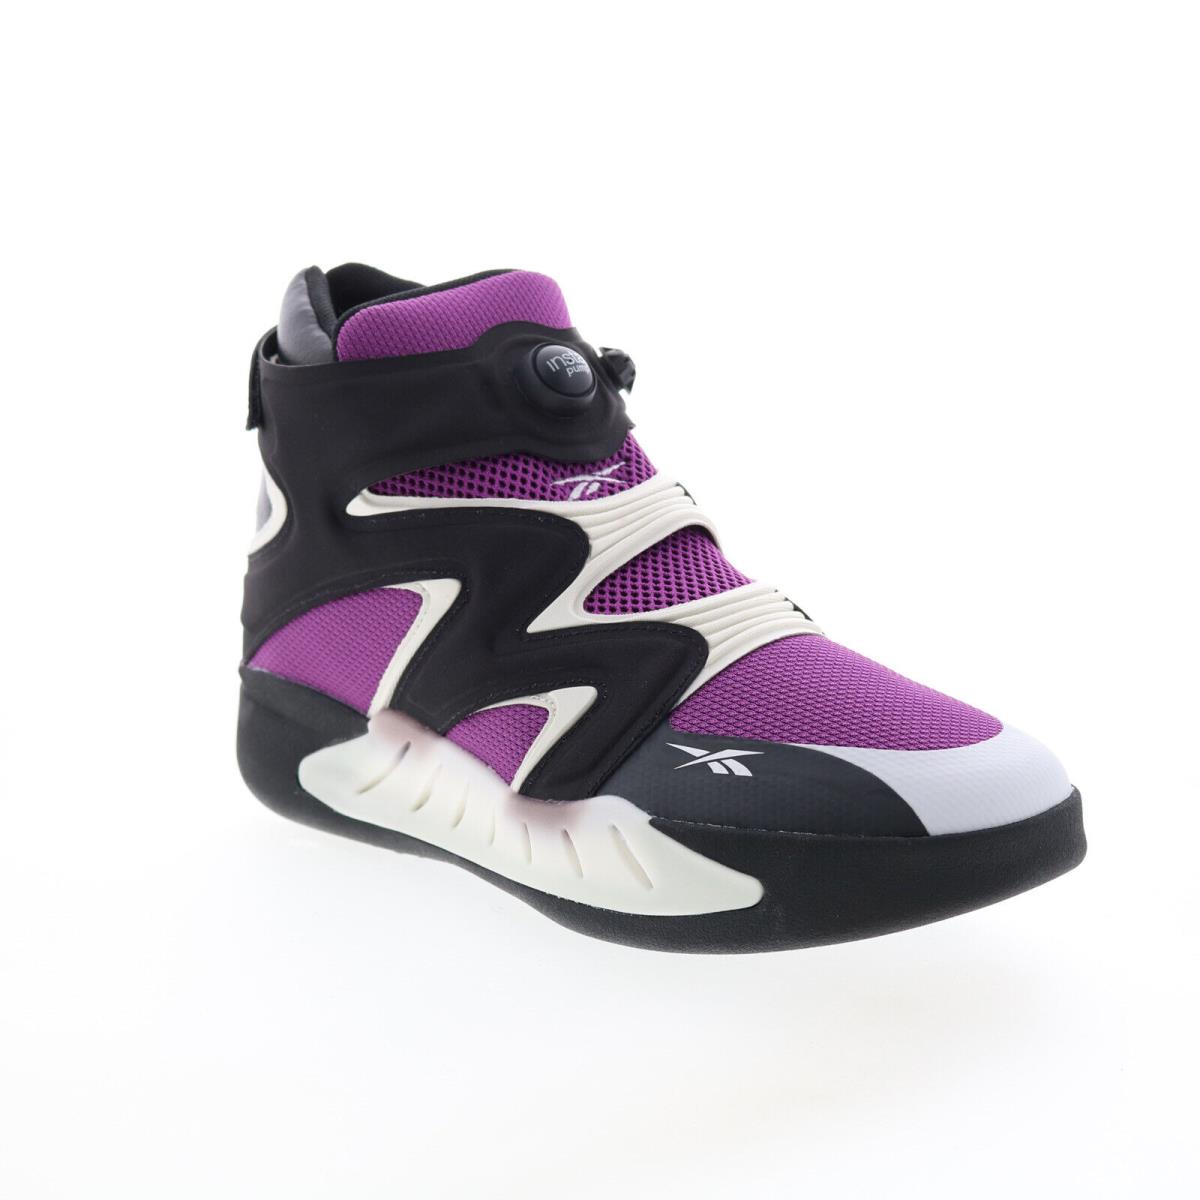 Reebok Instapump Fury Zone Mens Purple Canvas Lifestyle Sneakers Shoes - Purple